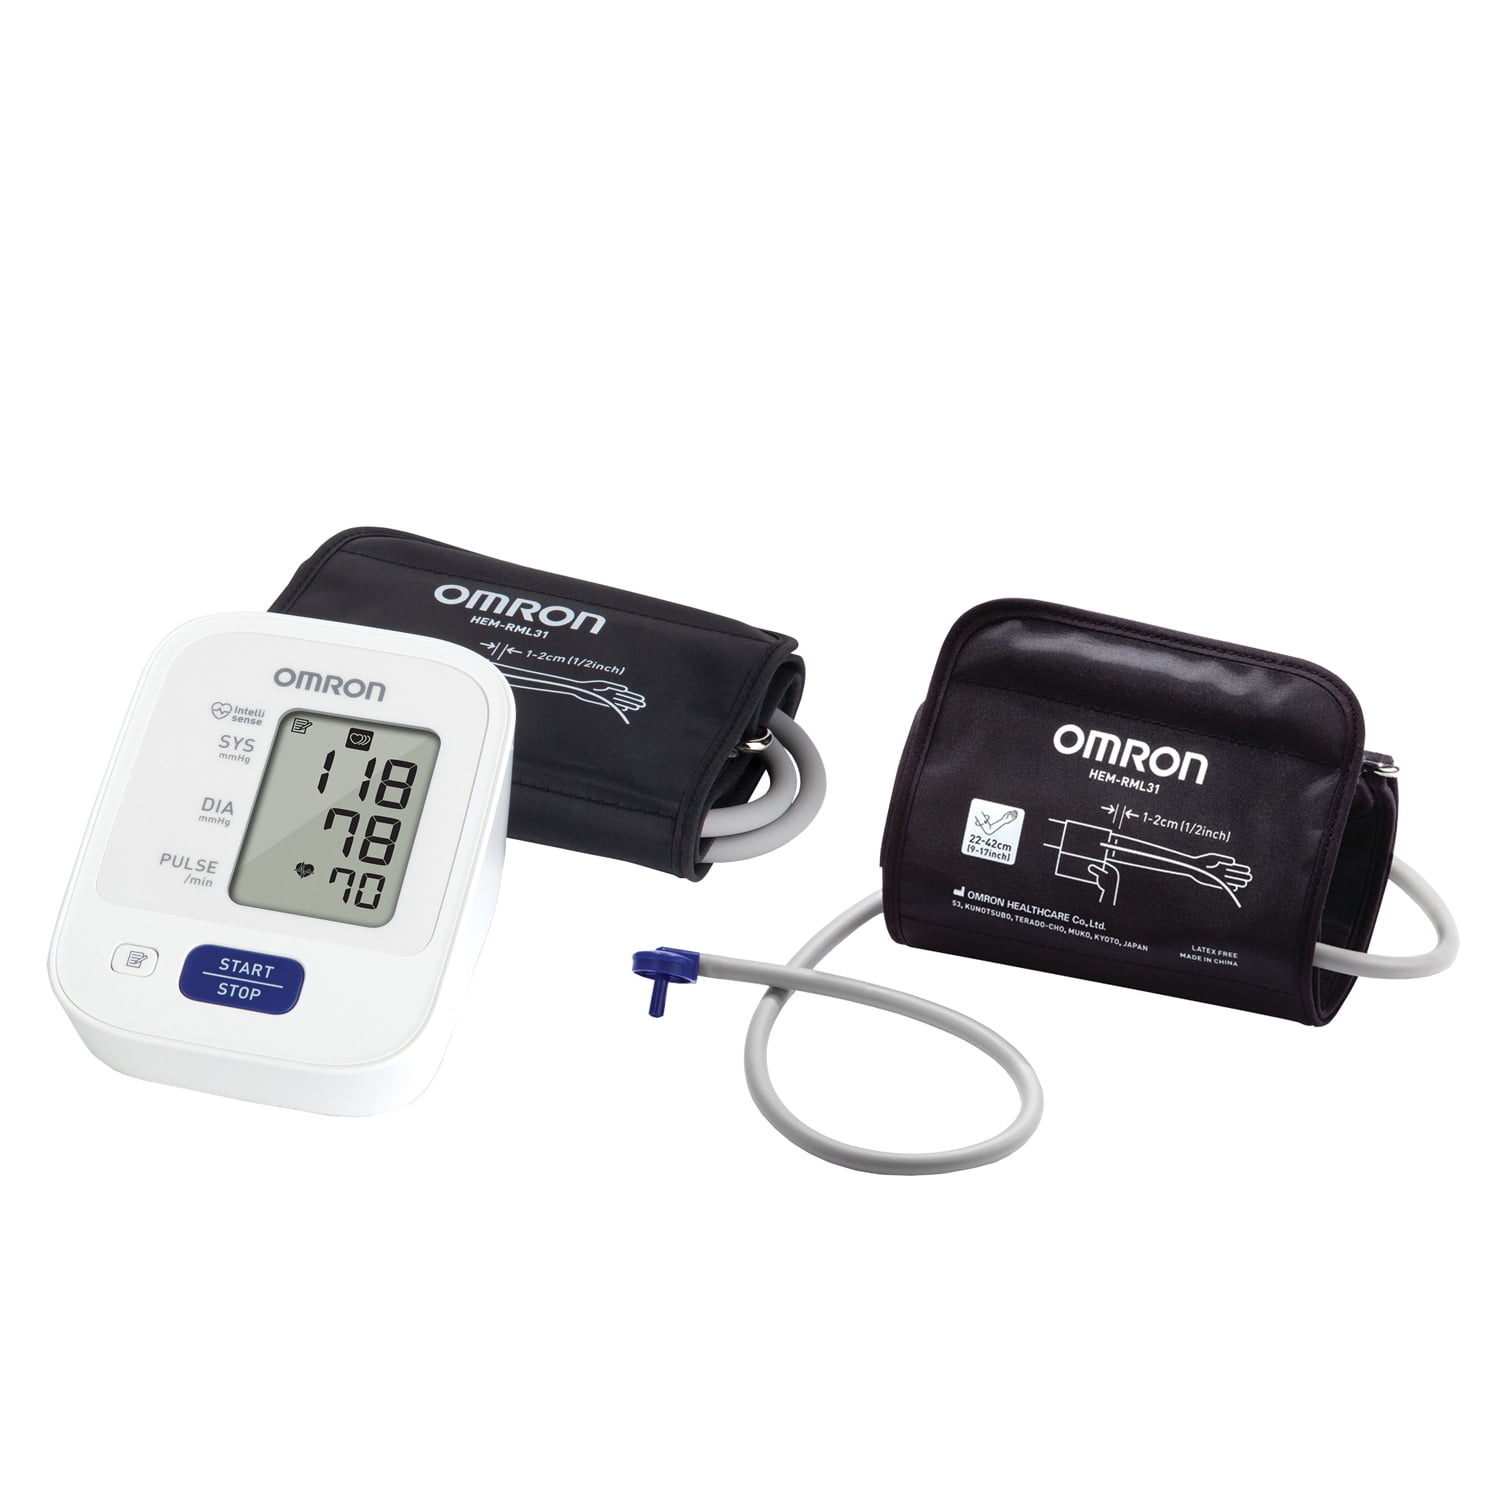 LTGEM EVA Hard Case for Omron Evolv Bluetooth Wireless Upper Arm Blood  Pressure